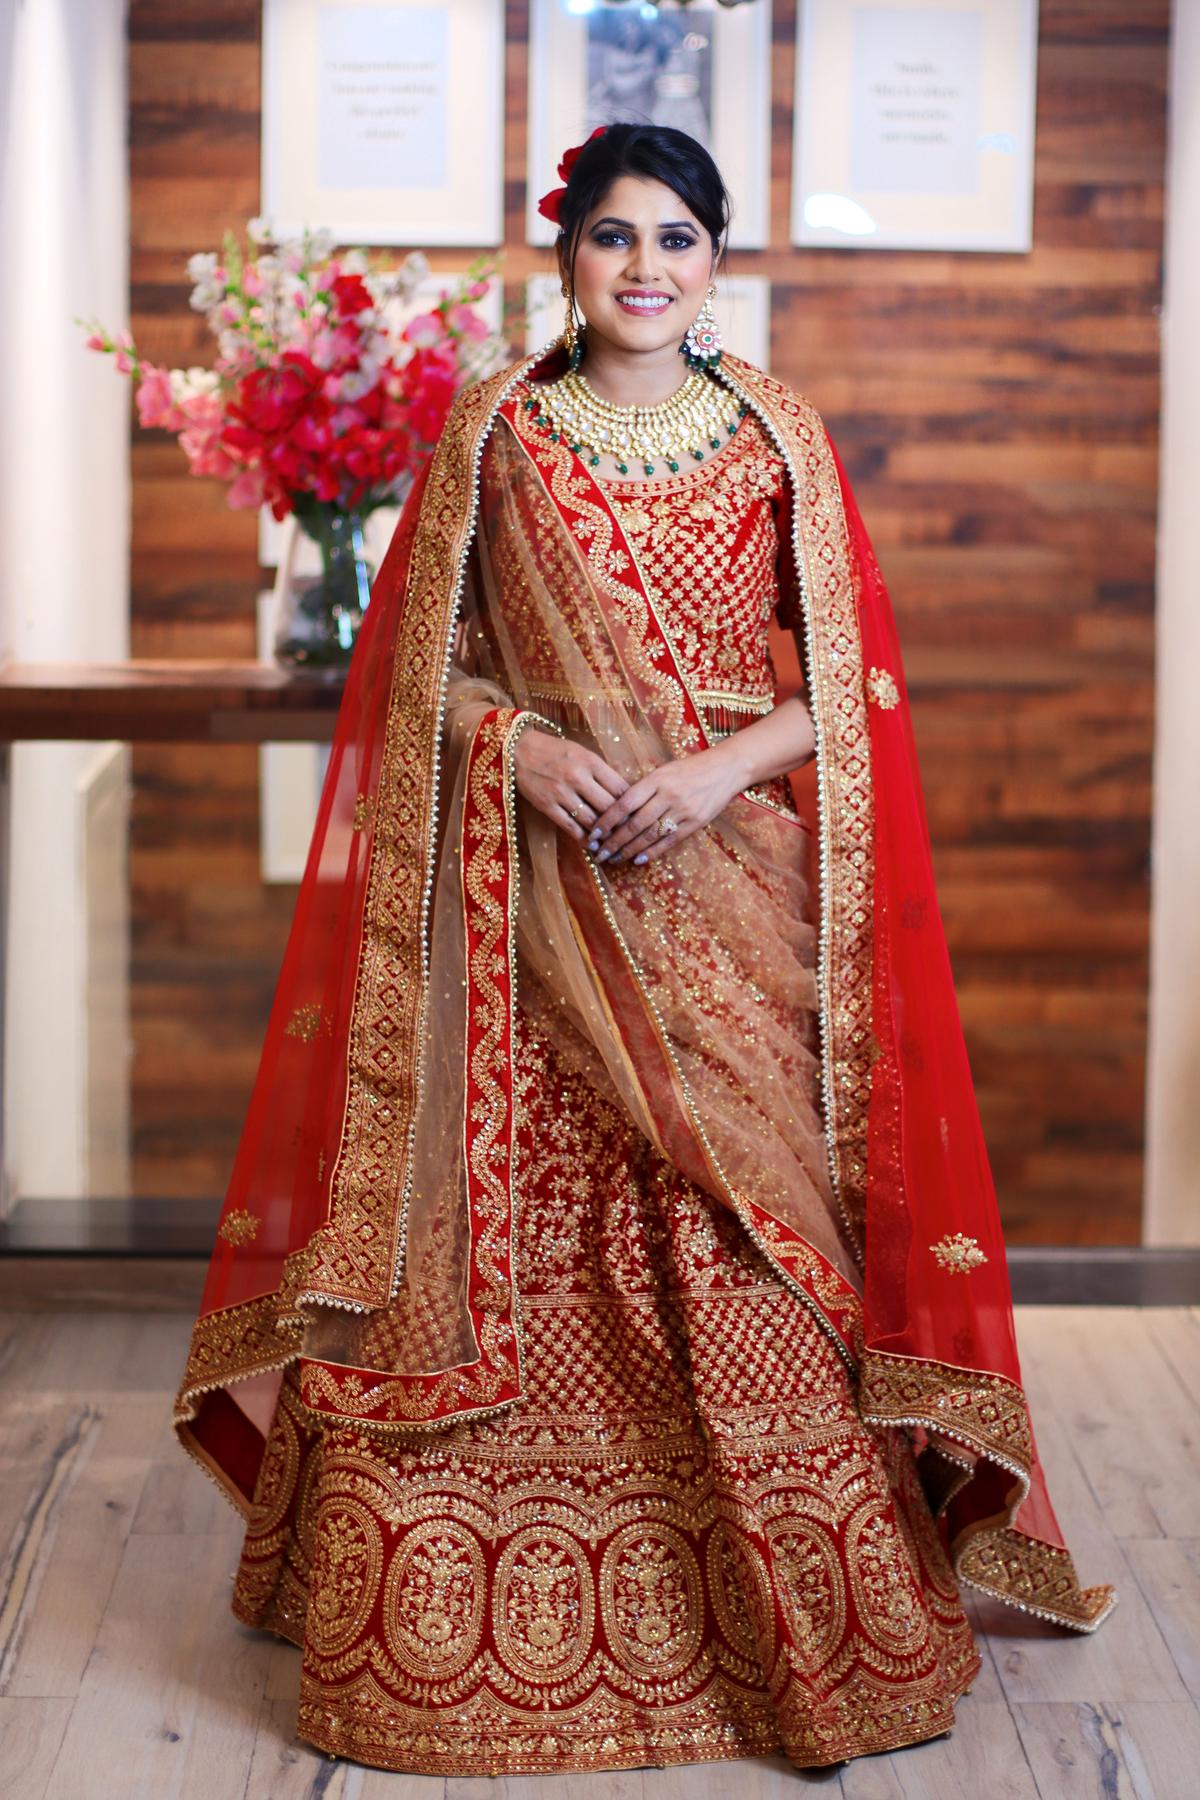 Designer Bridal Lehenga in Red and Golden Colour #BN1140 - CUSTOM SIZE |  Designer bridal lehenga, Red wedding dresses, Lehenga gown